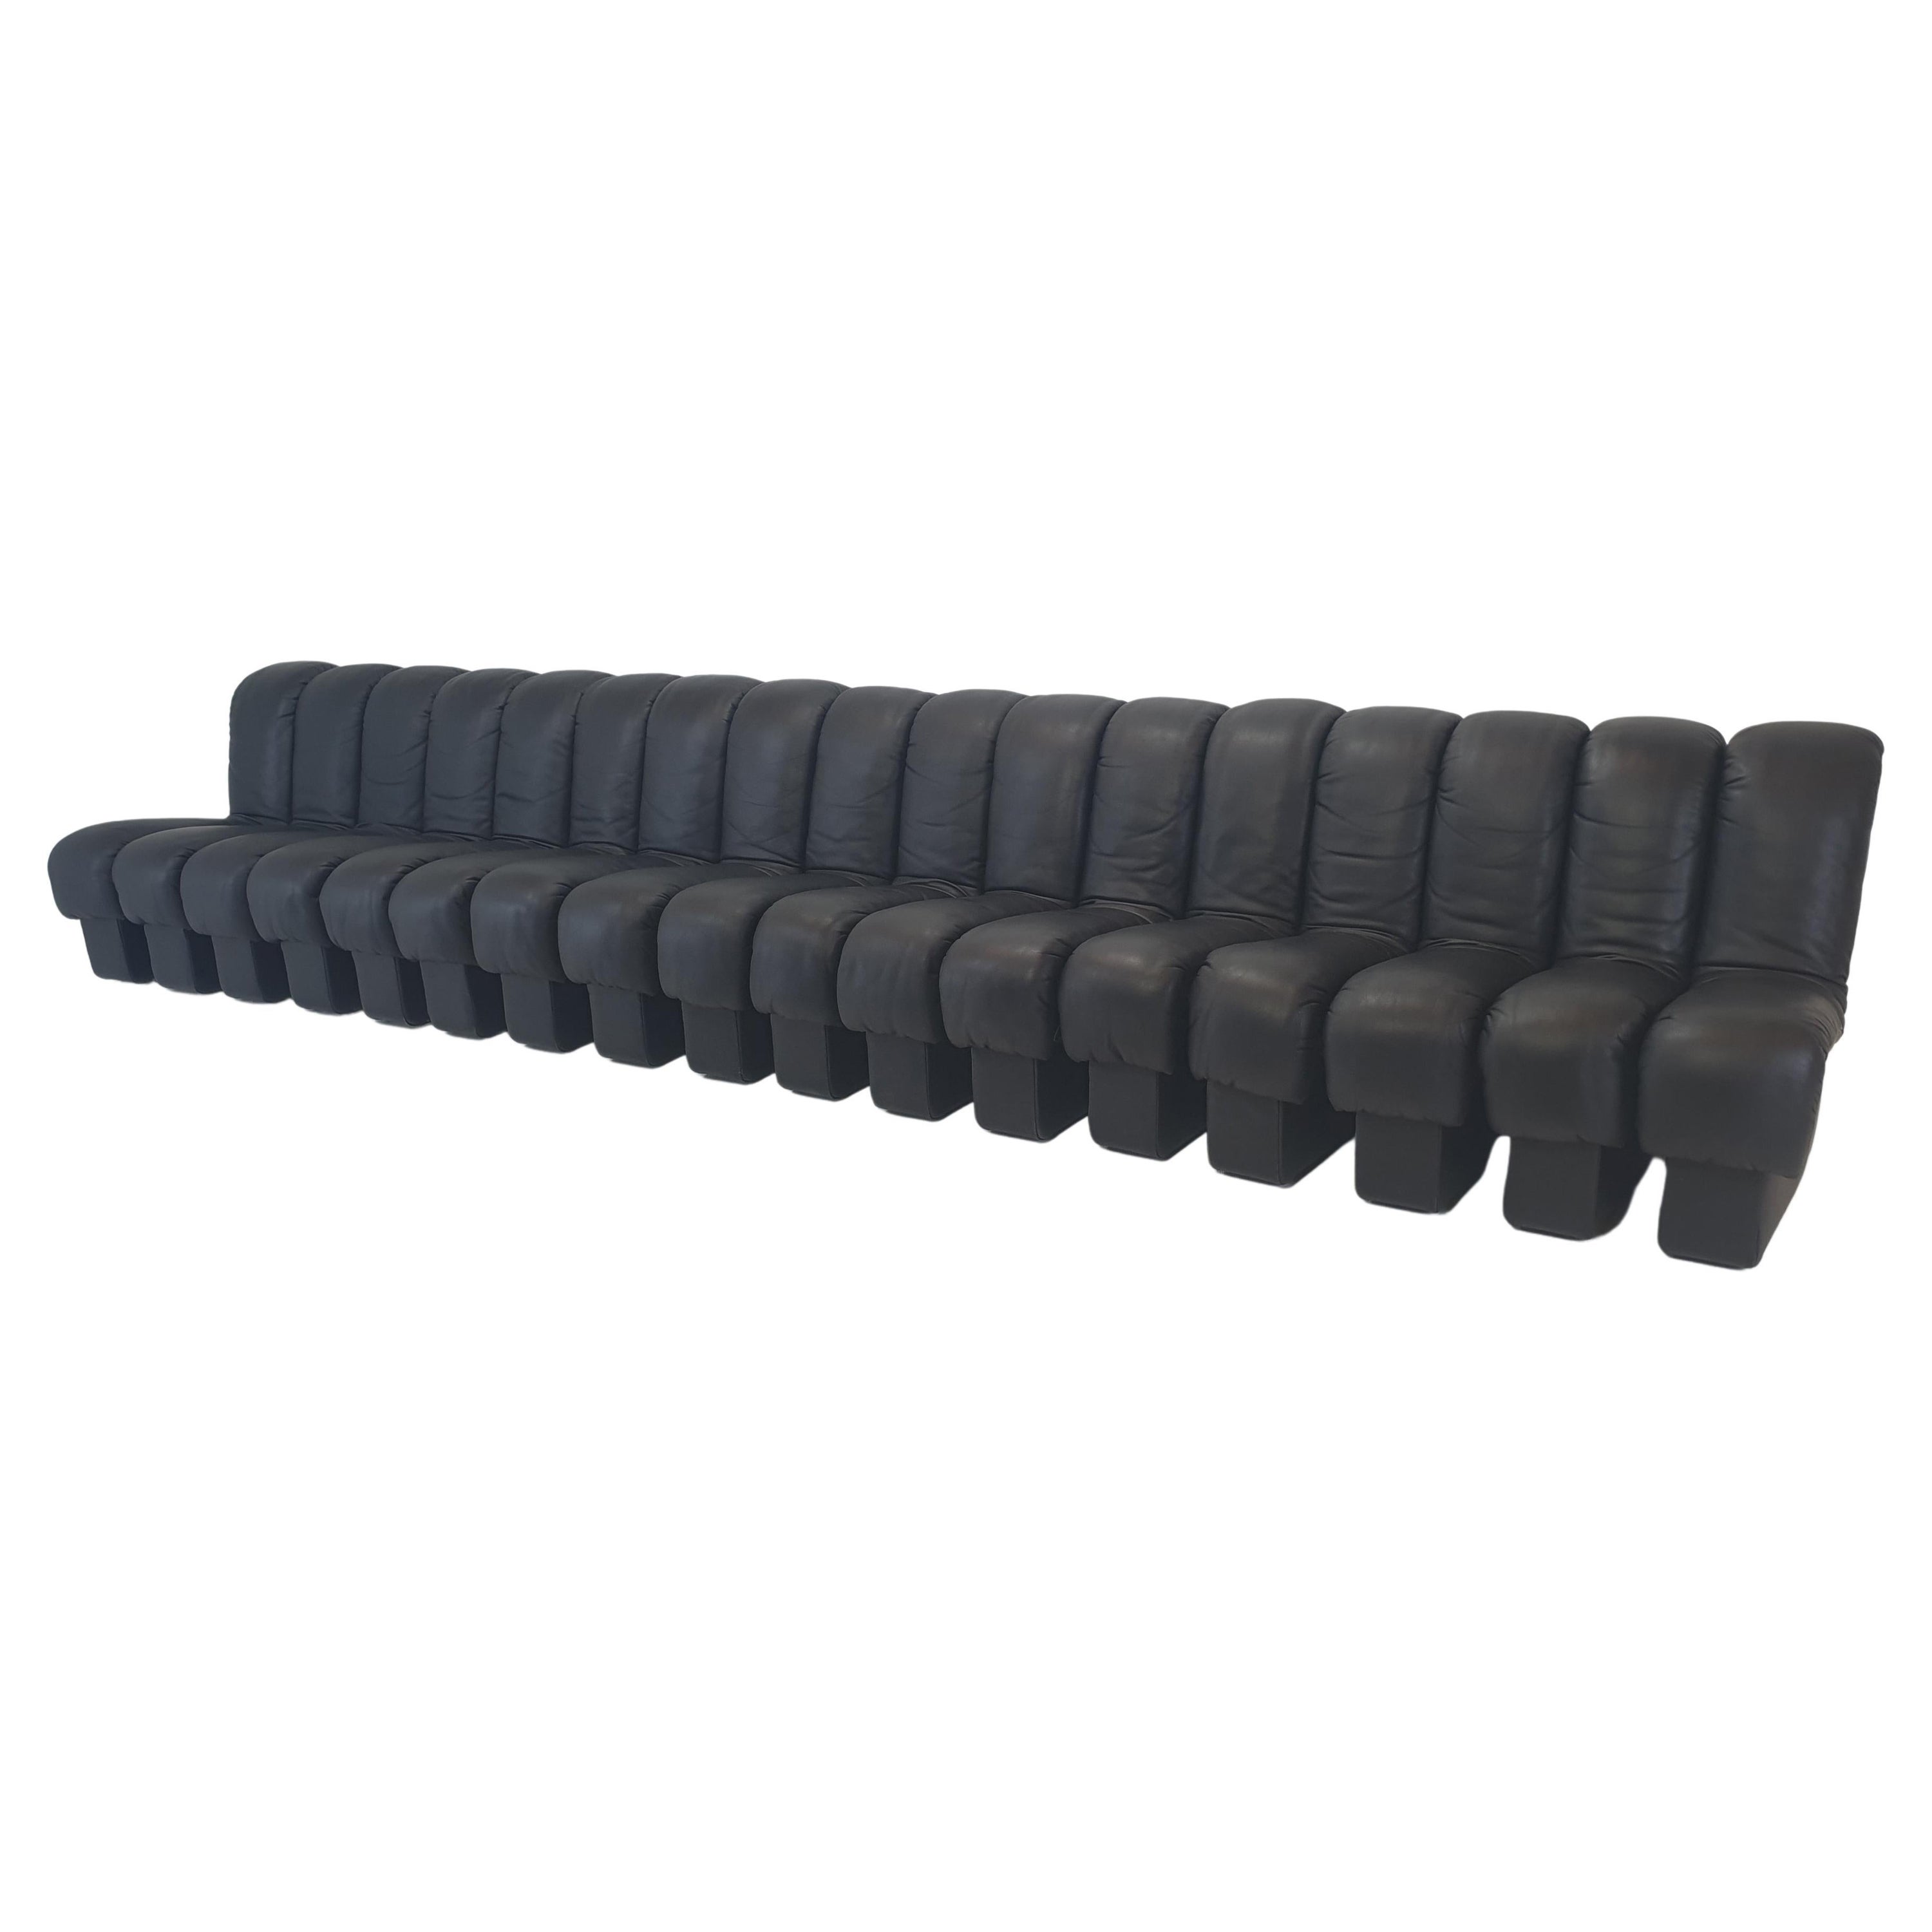 De Sede Ds-600 "Non Stop" Snake Shaped Modular Sofa in Full Black Leather